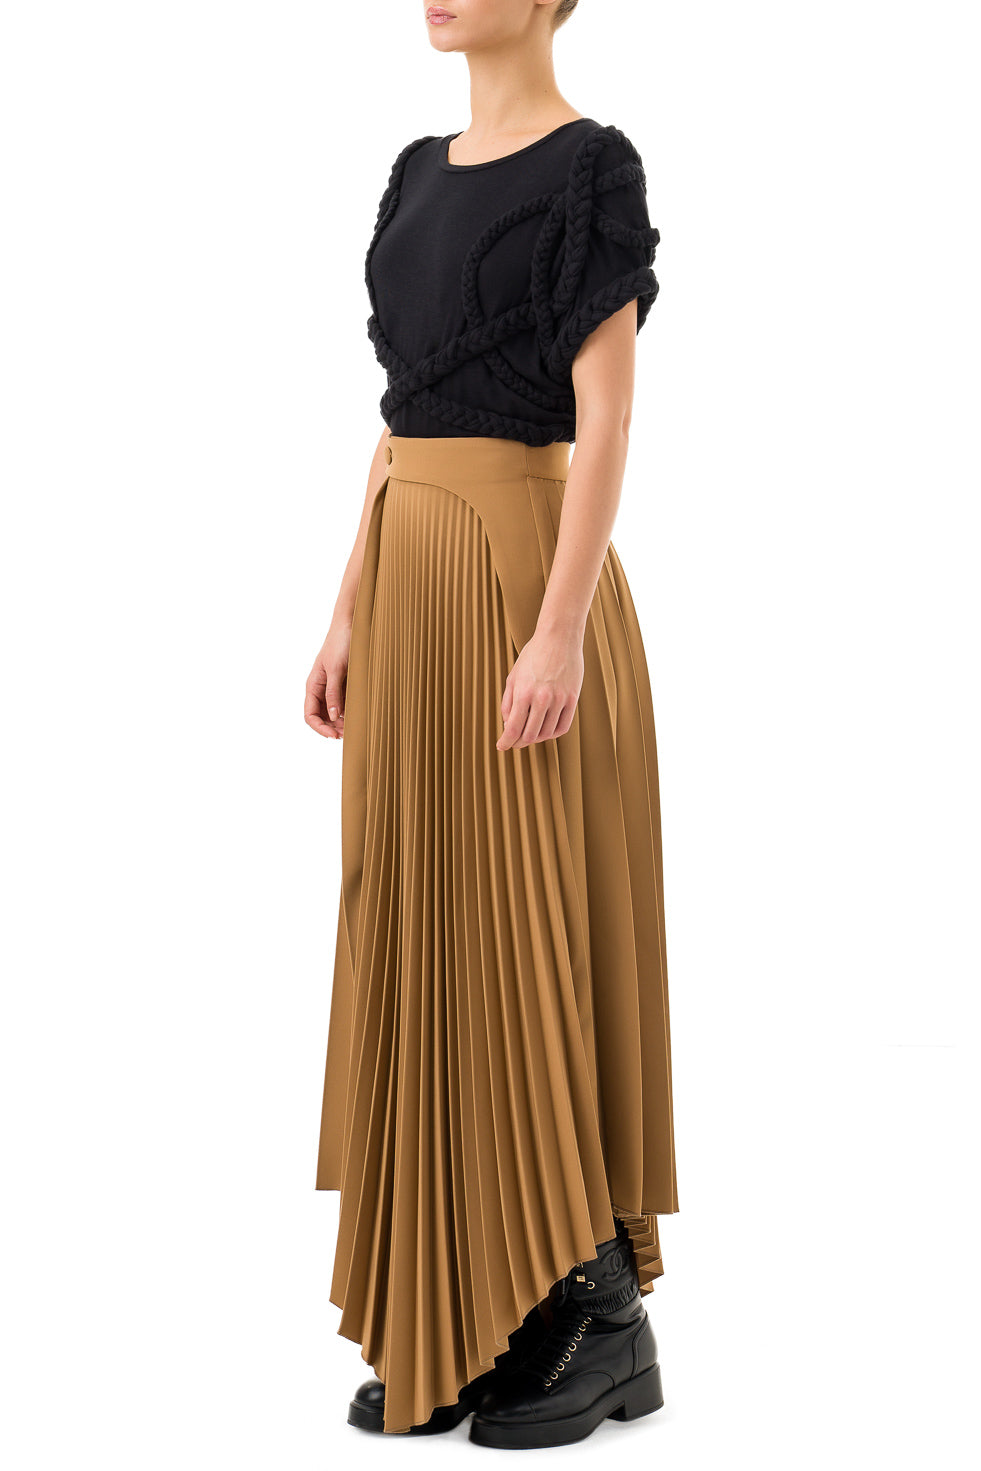 Jamila Brown Asymmetric Pleated Long Skirt